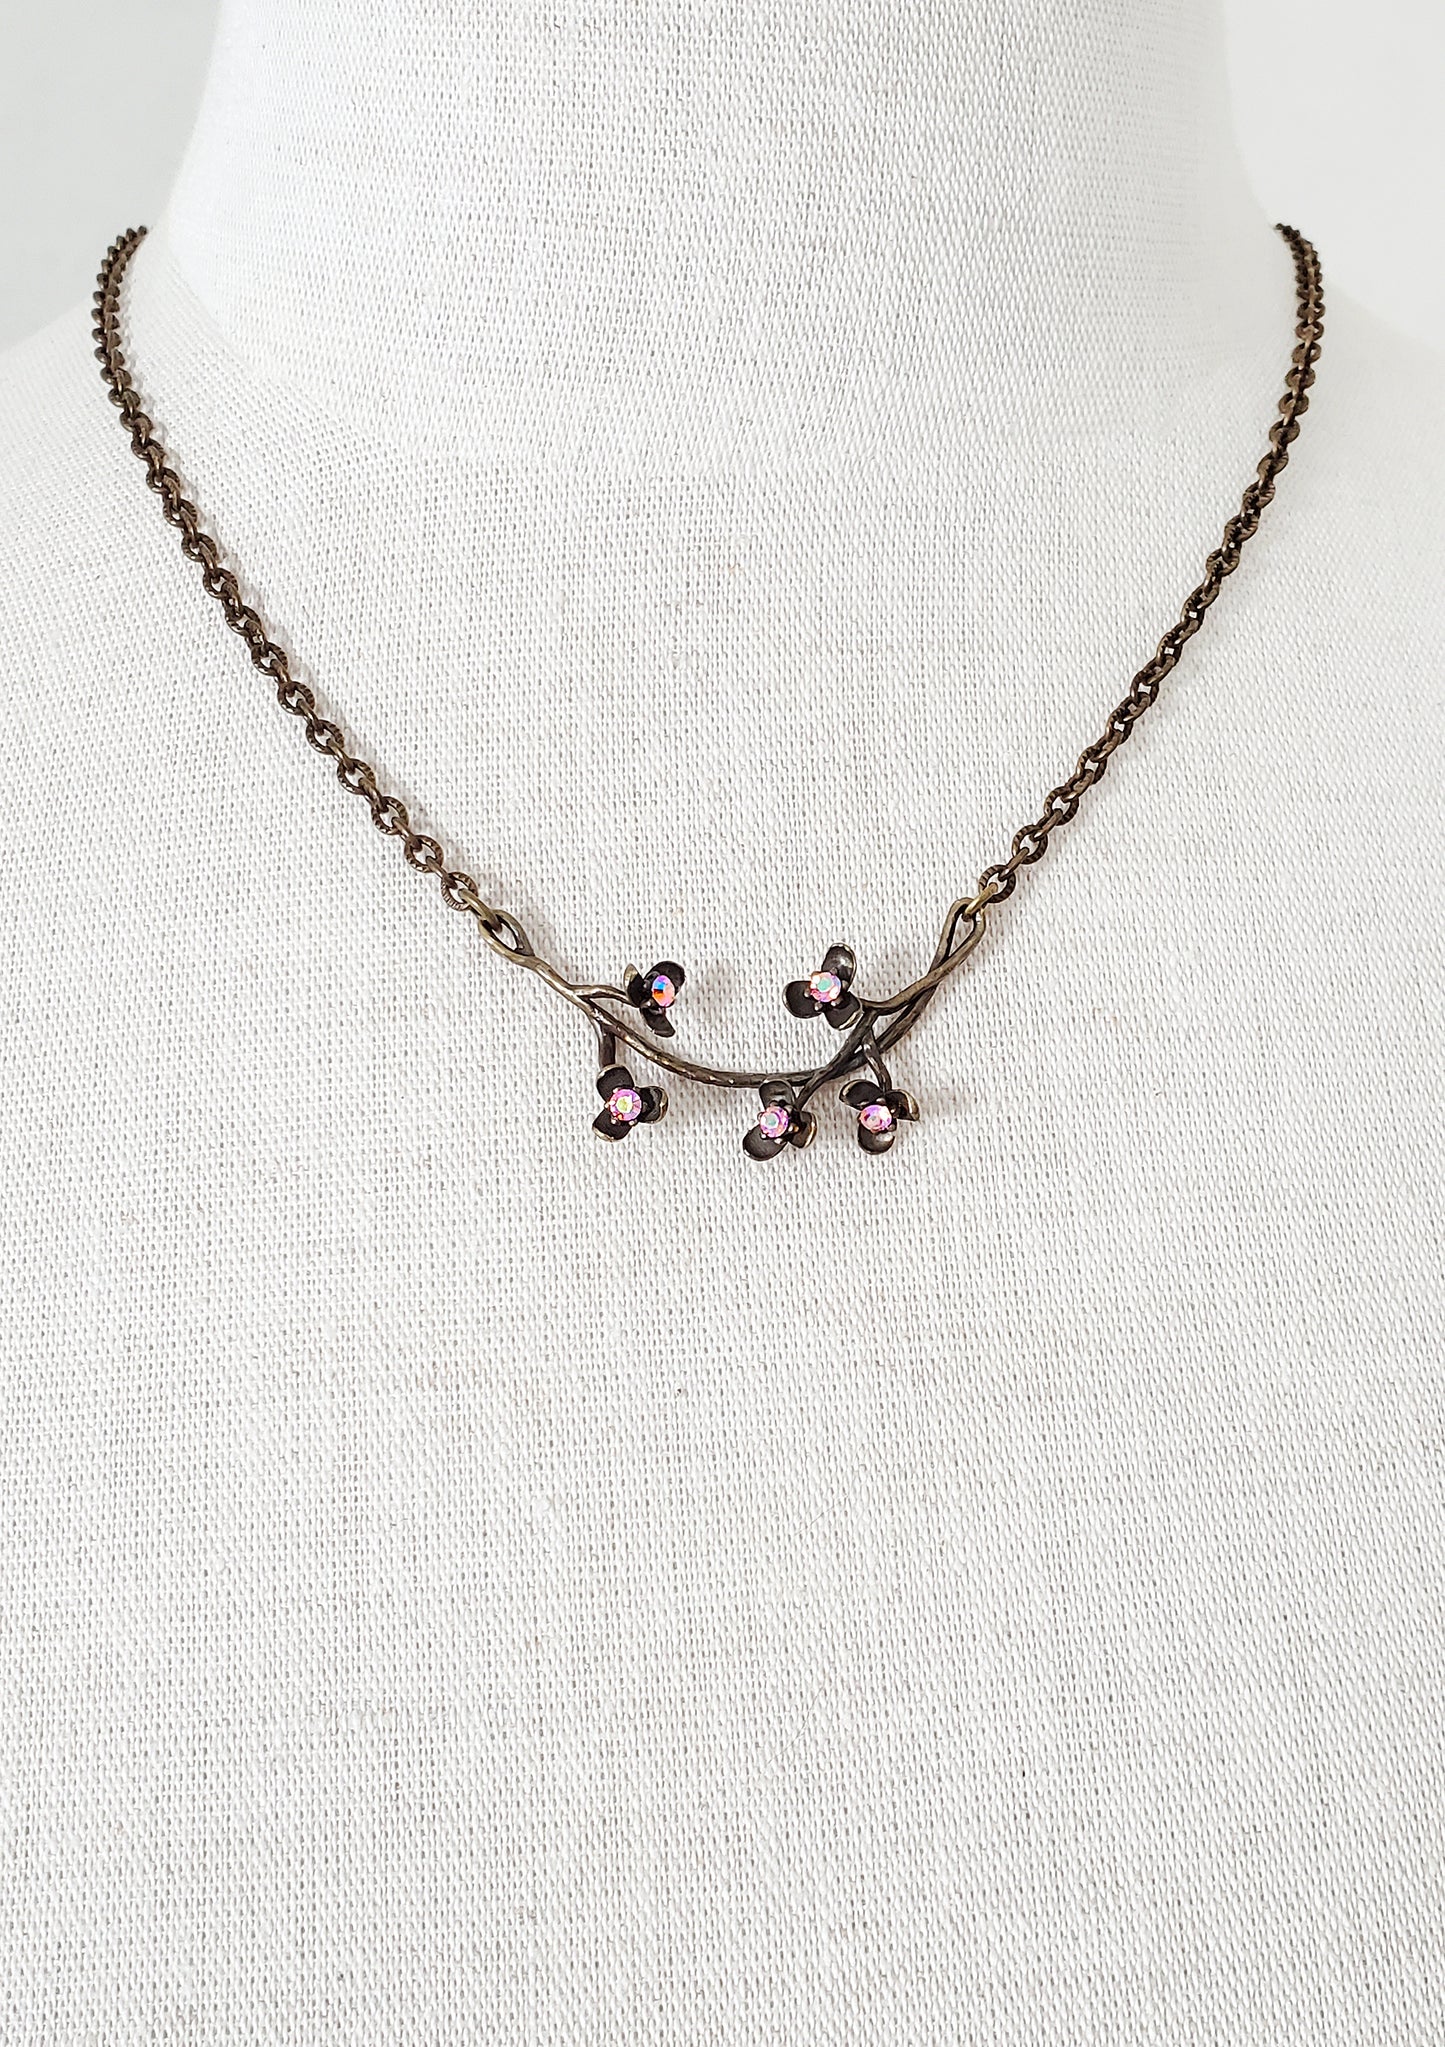 Dark Vine Flower Pendant Necklace